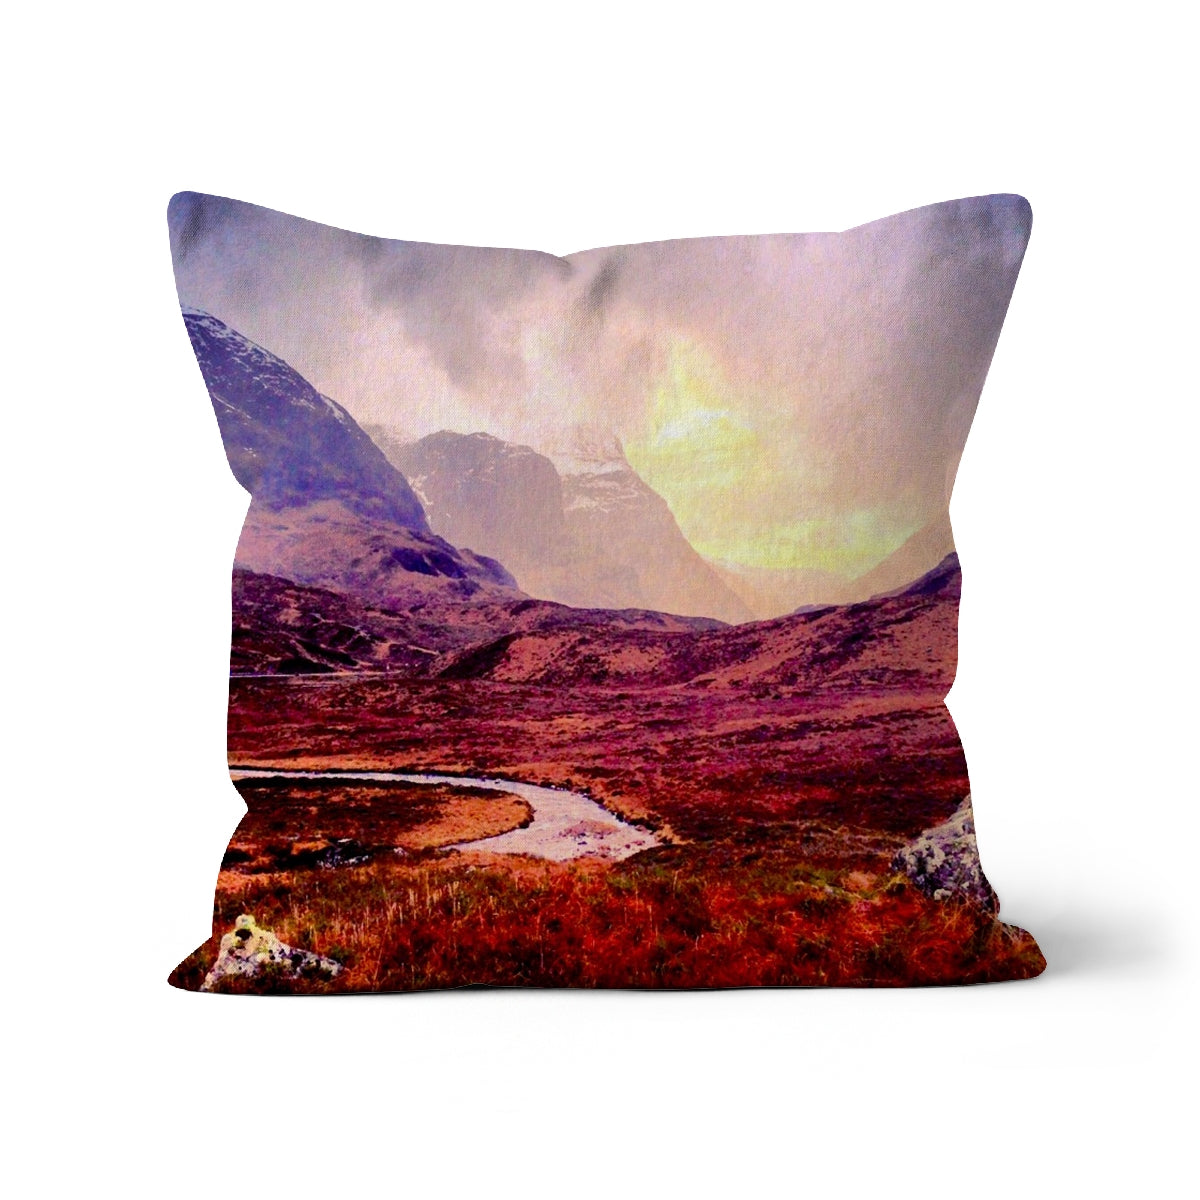 A Brooding Glencoe Art Gifts Cushion-Cushions-Glencoe Art Gallery-Canvas-24"x24"-Paintings, Prints, Homeware, Art Gifts From Scotland By Scottish Artist Kevin Hunter